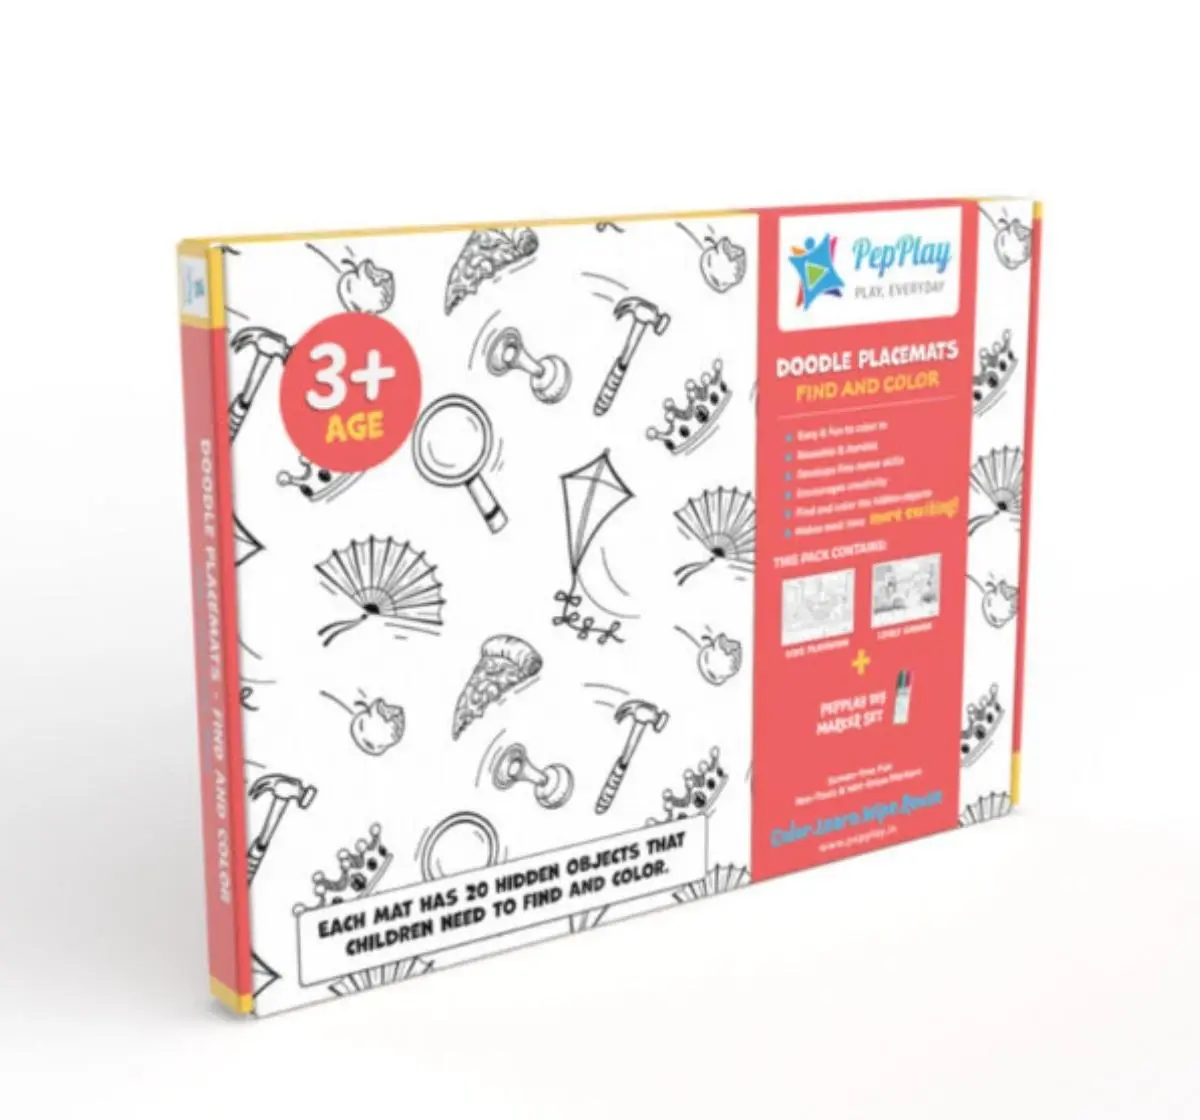 Pepplay Doodle Placemats Set Find & Color Series, 8 Cm, Multicolor, 3Y+